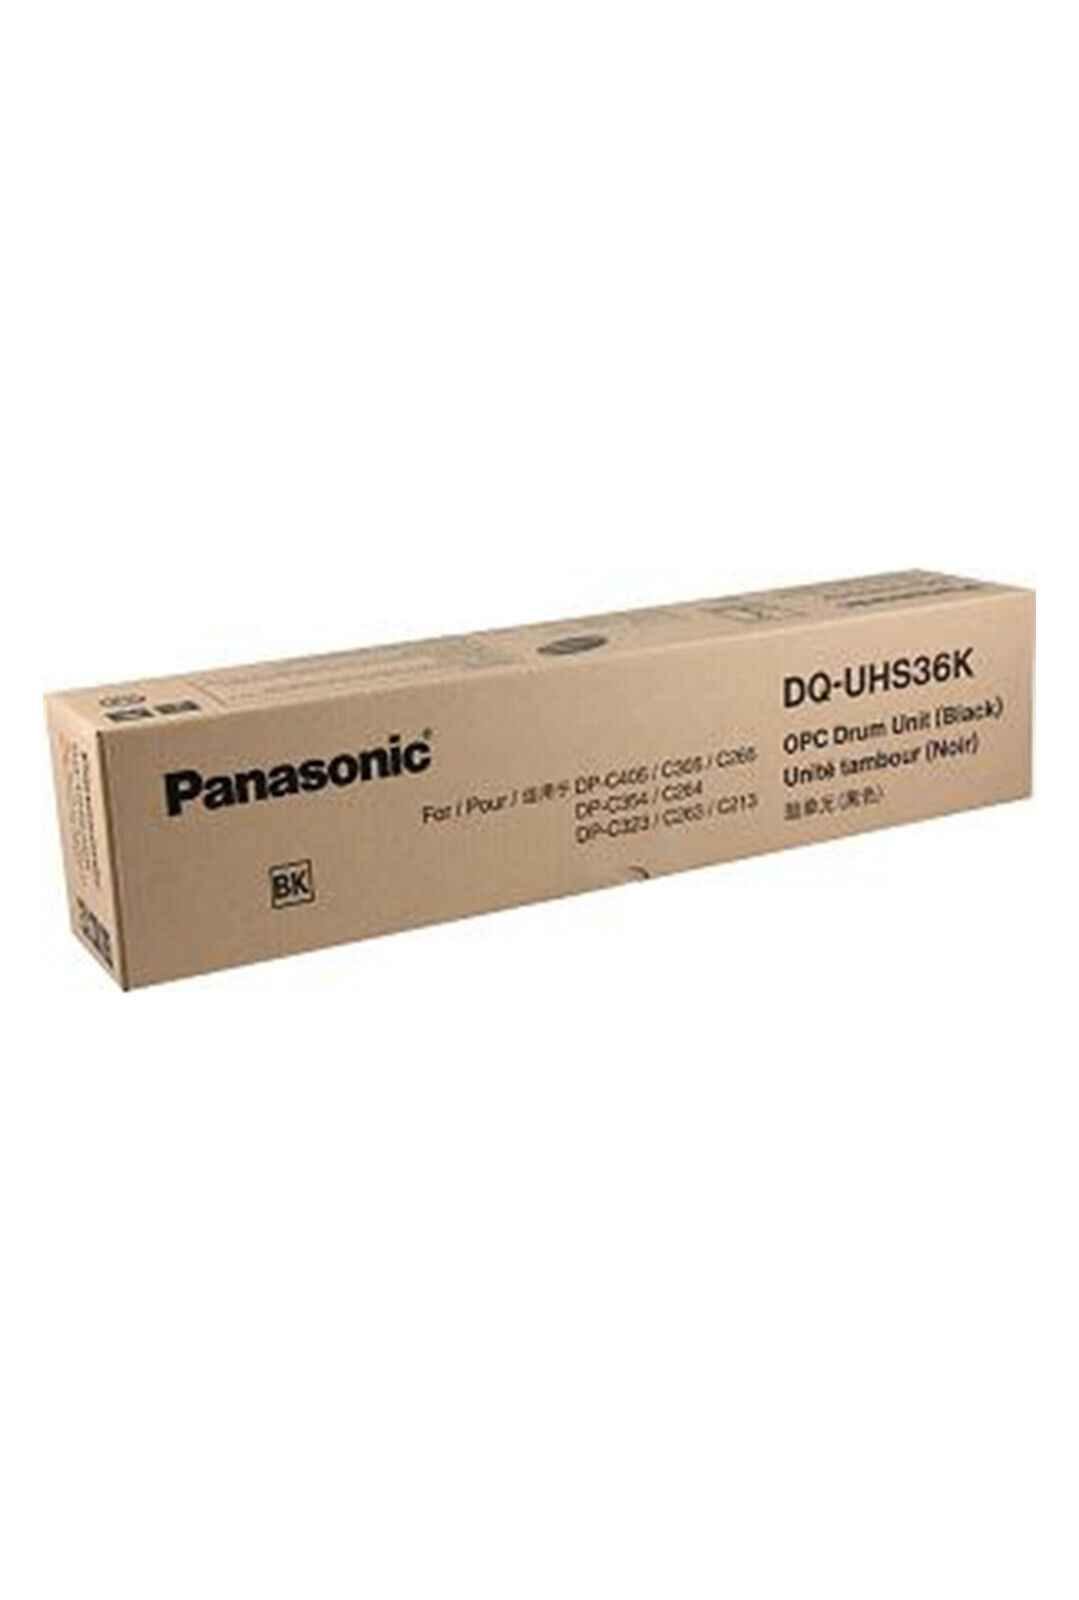 PANASONIC BLACK OPC DRUM UNIT(39K) (DQ-UHS36K)